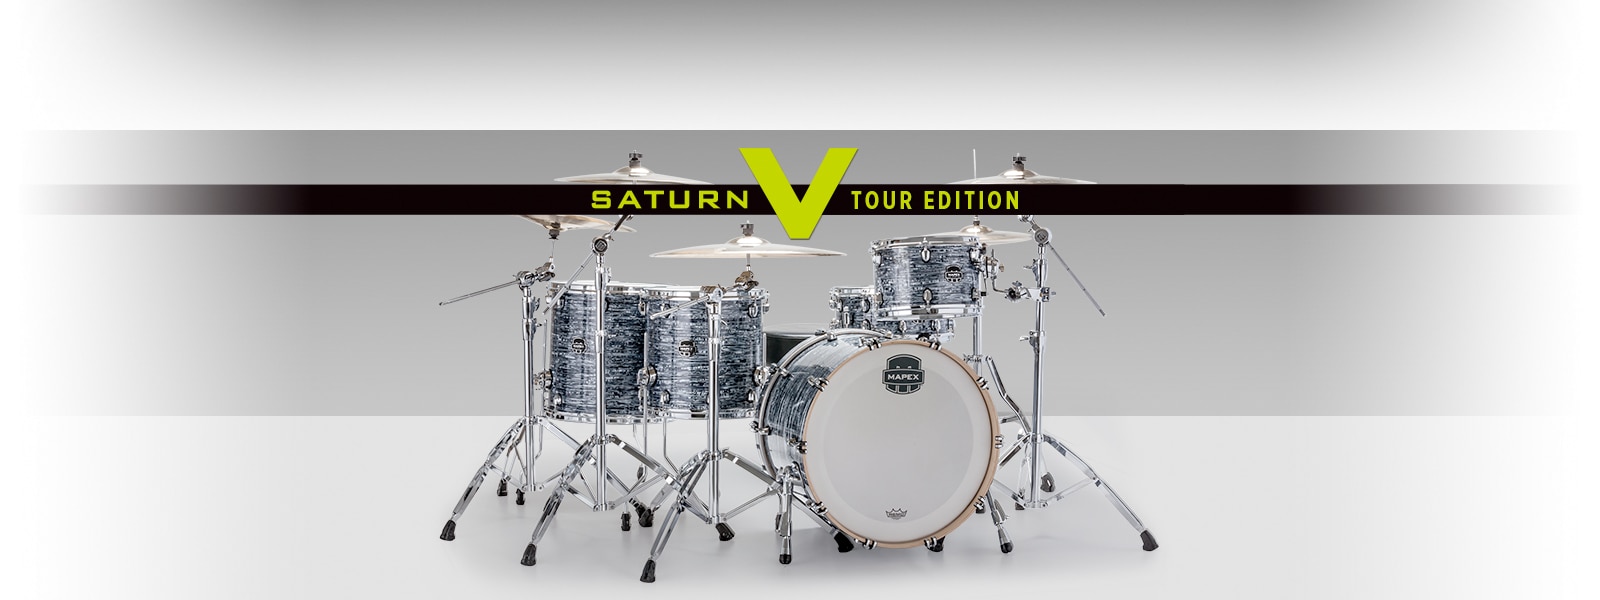 Saturn V tour edition